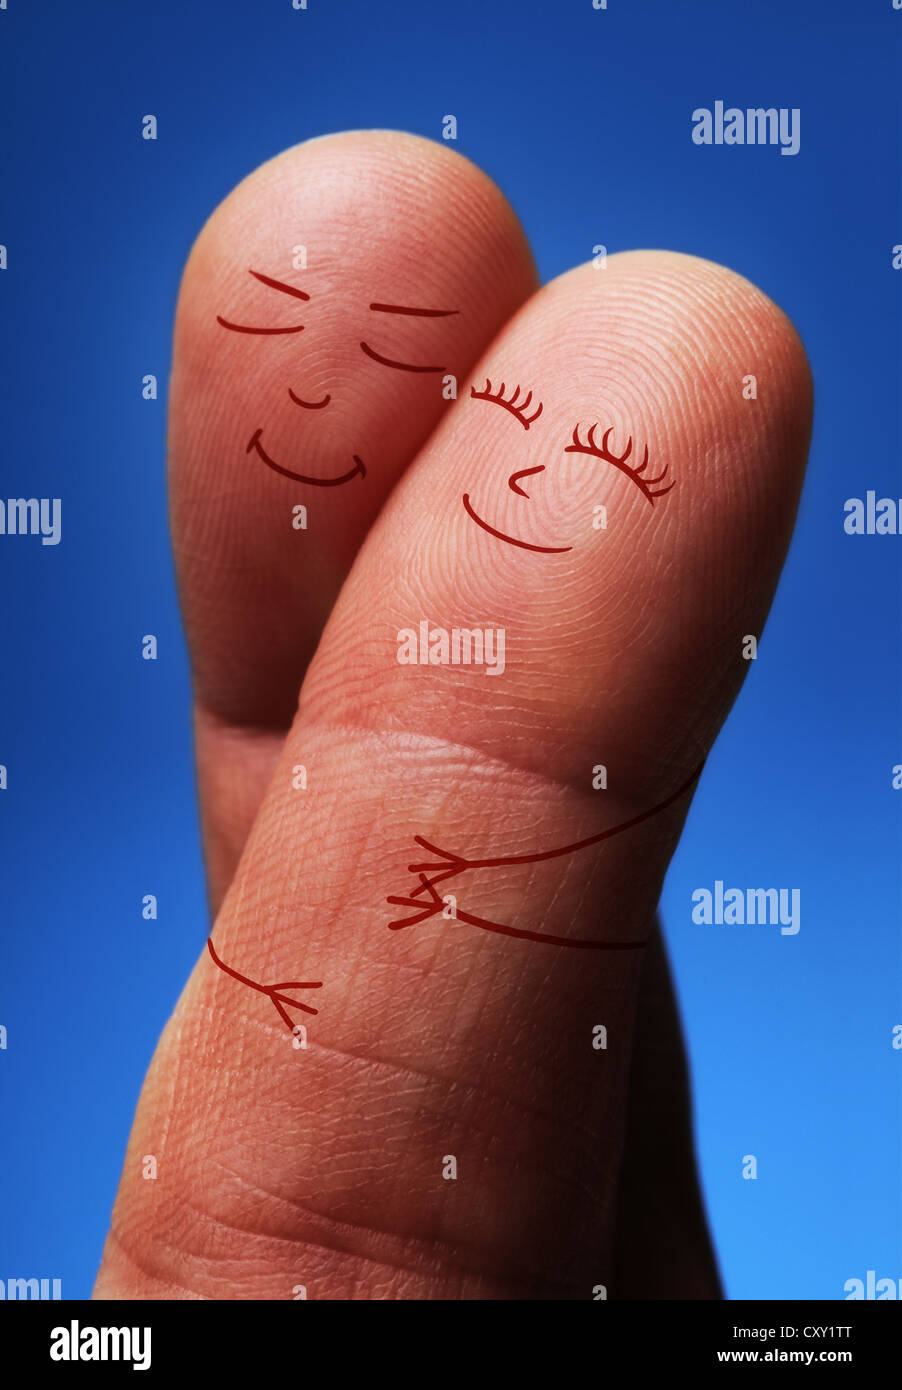 Finger people in love Stock Photo